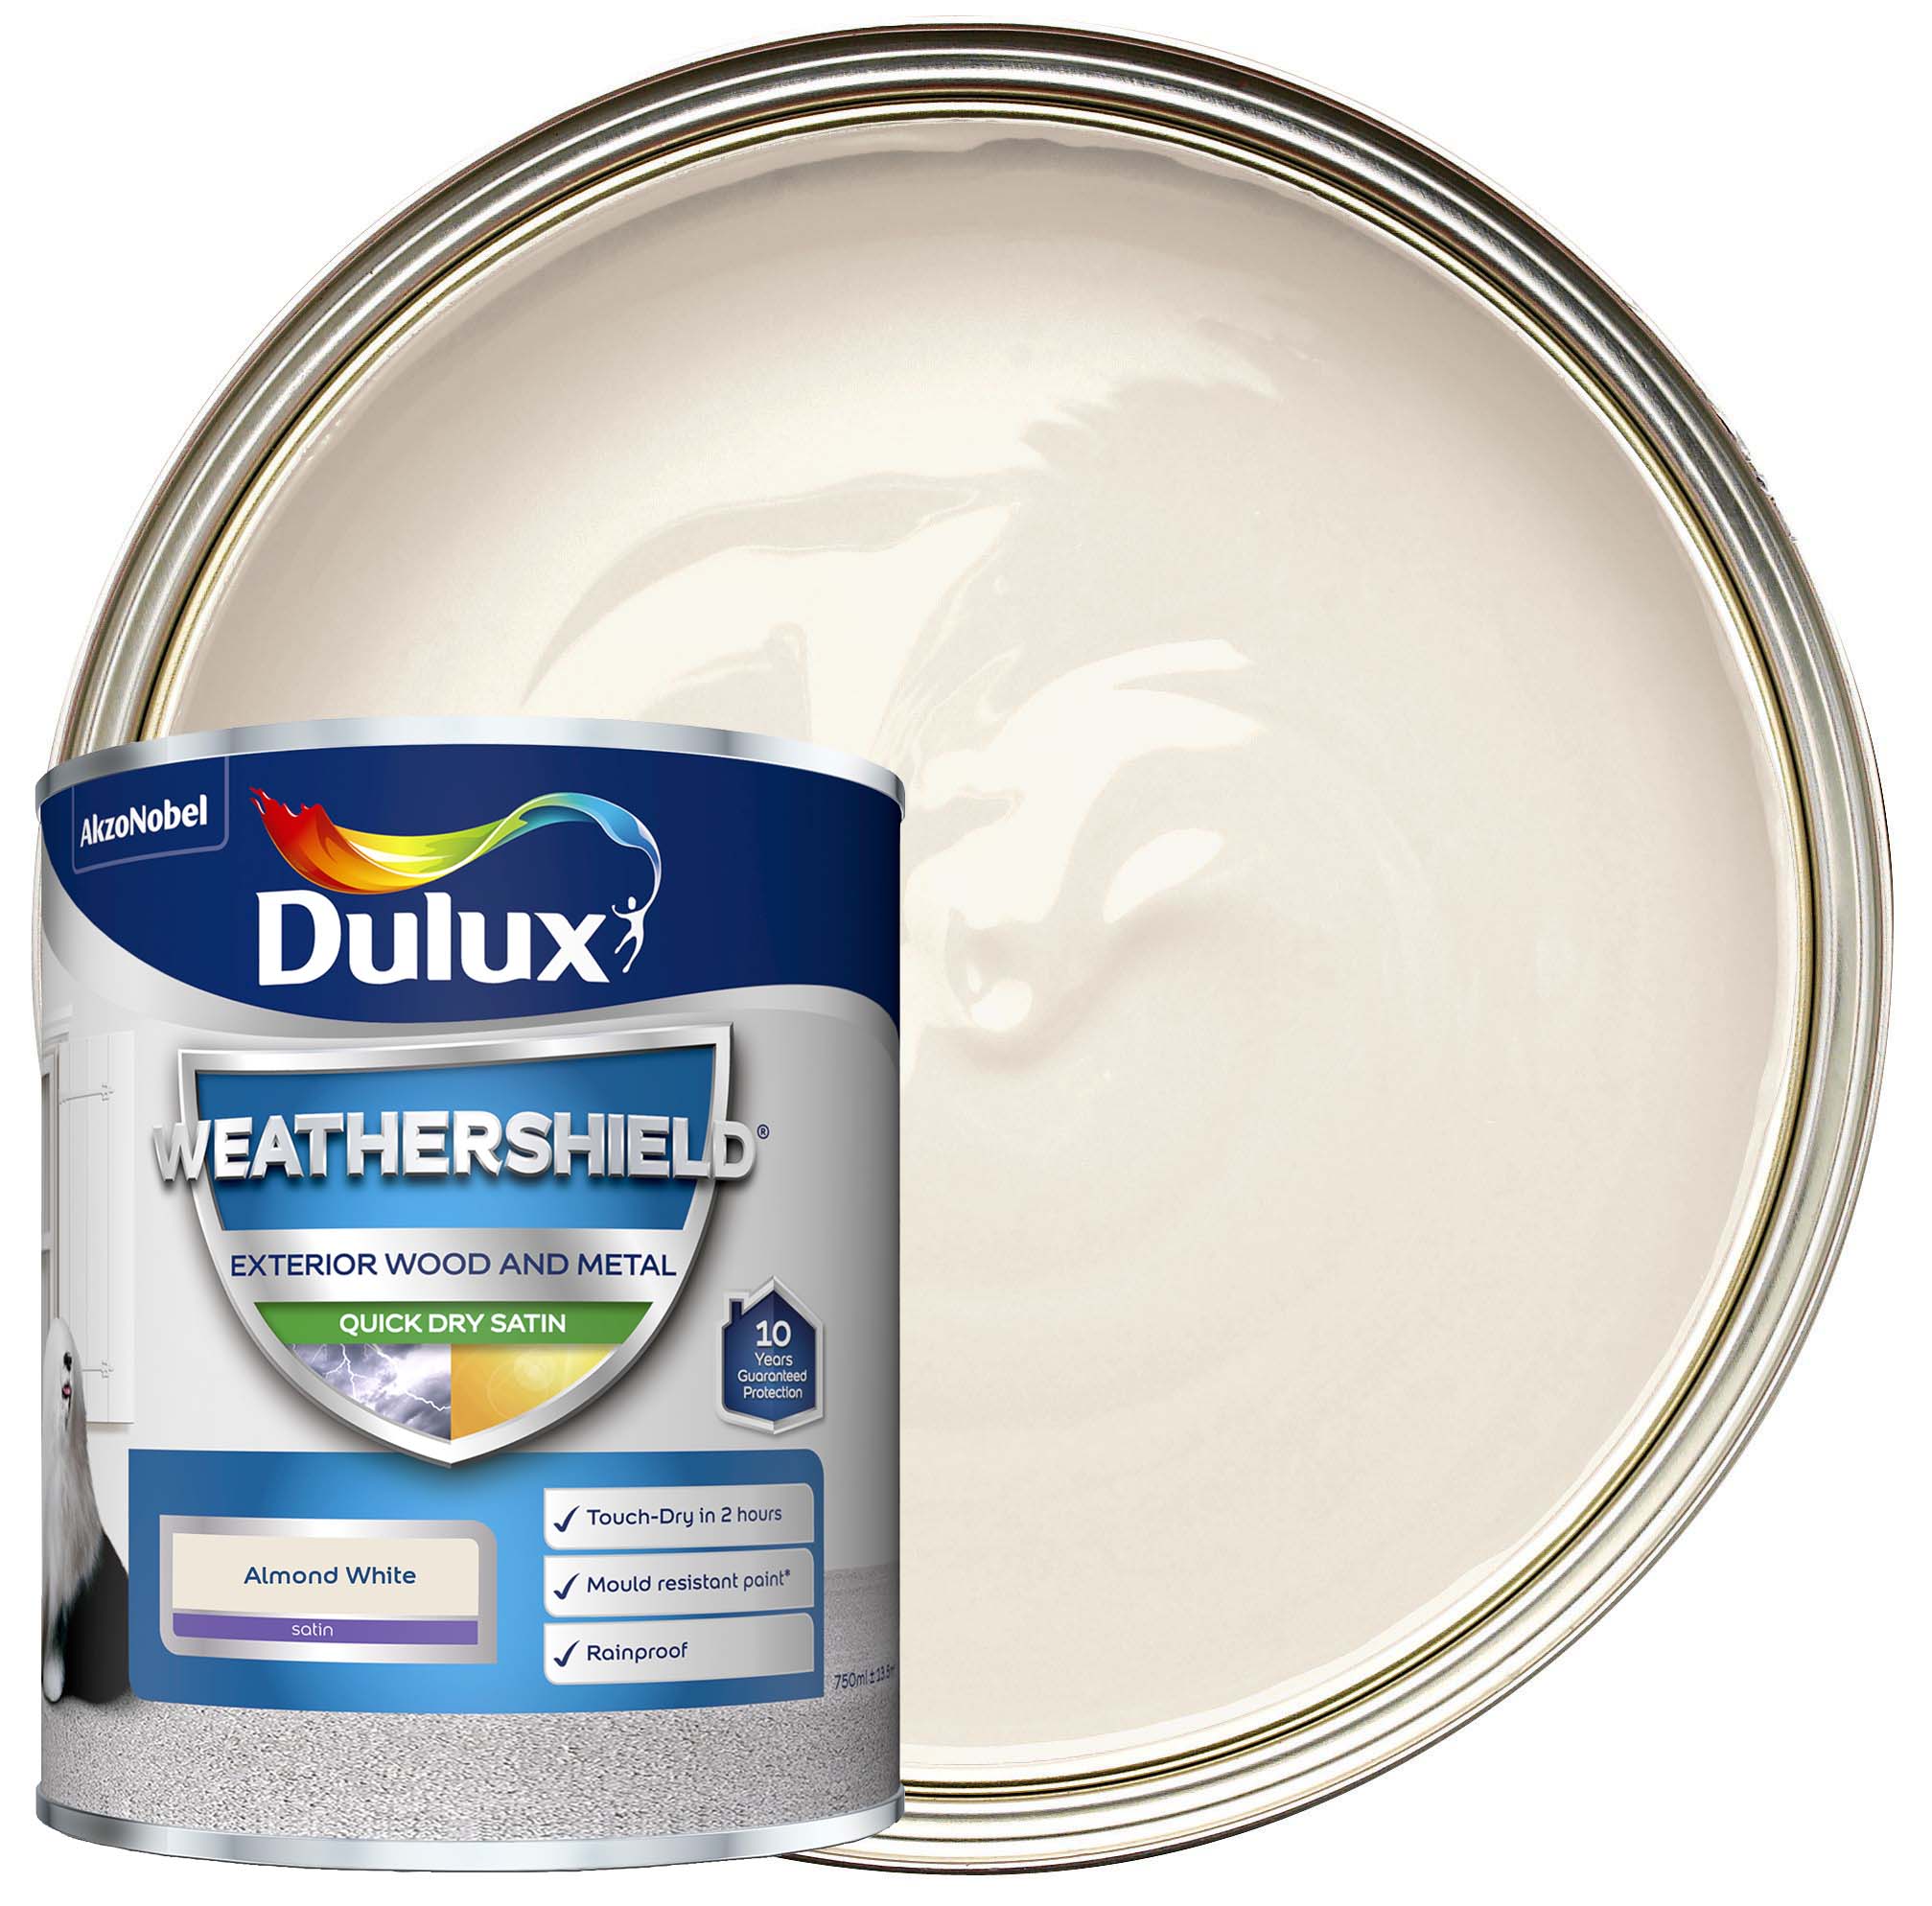 Image of Dulux Weathershield Quick Dry Satin Paint - Almond White - 750ml